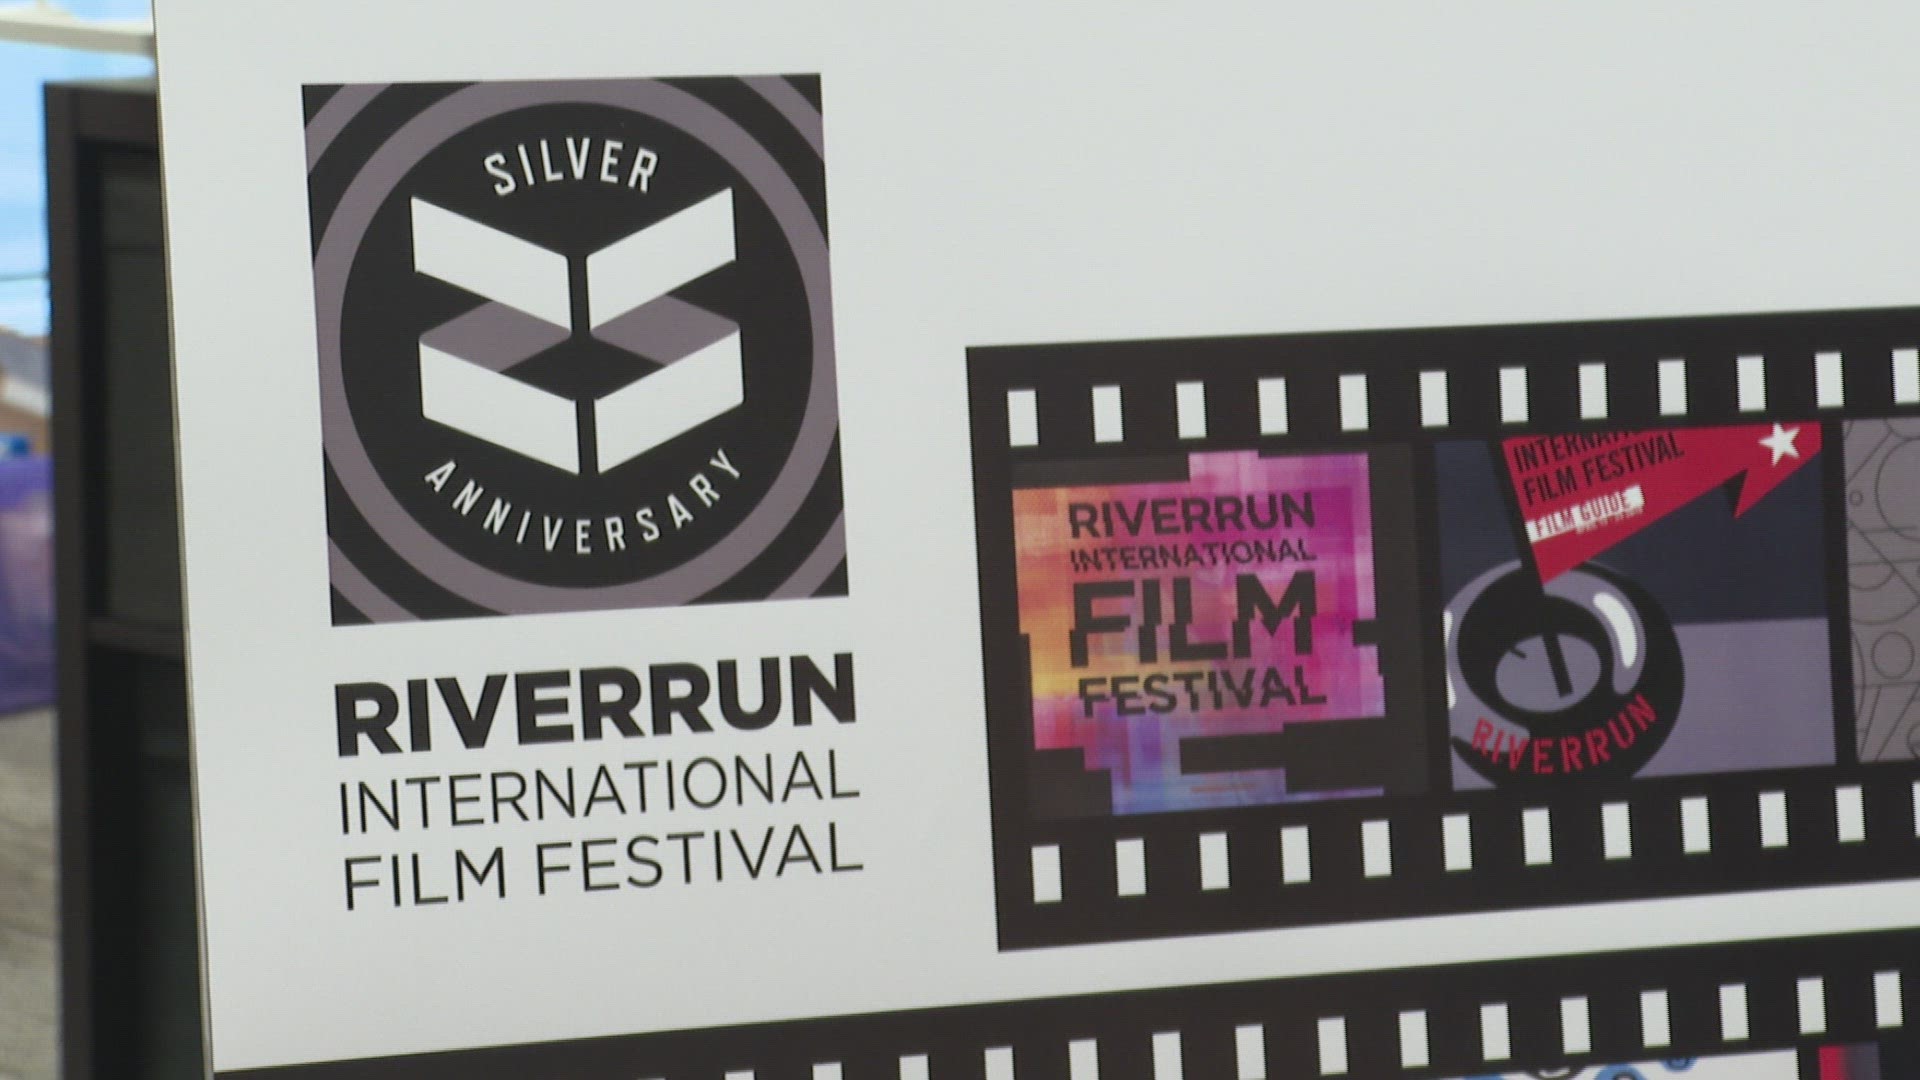 RiverRun Film Festival is still going strong